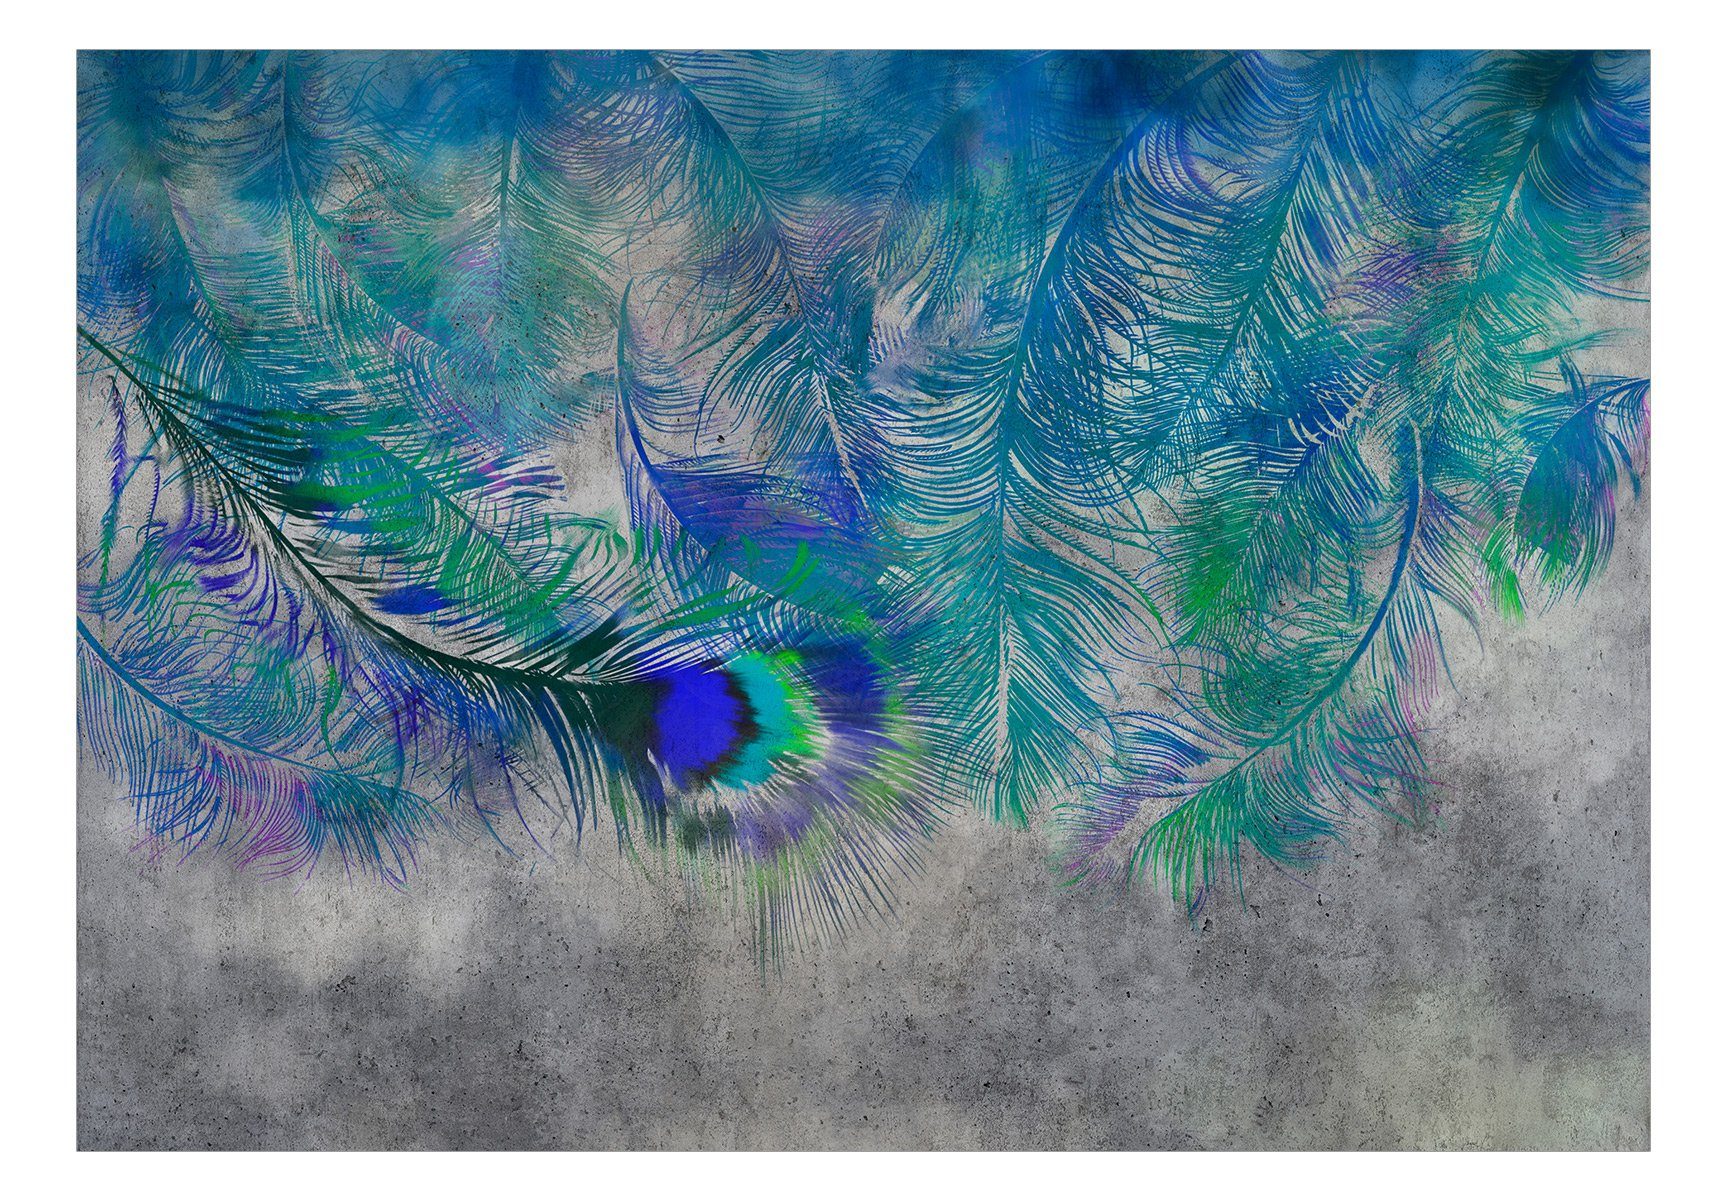 KUNSTLOFT matt, Peacock m, Feathers 0.98x0.7 Tapete Vliestapete Design lichtbeständige